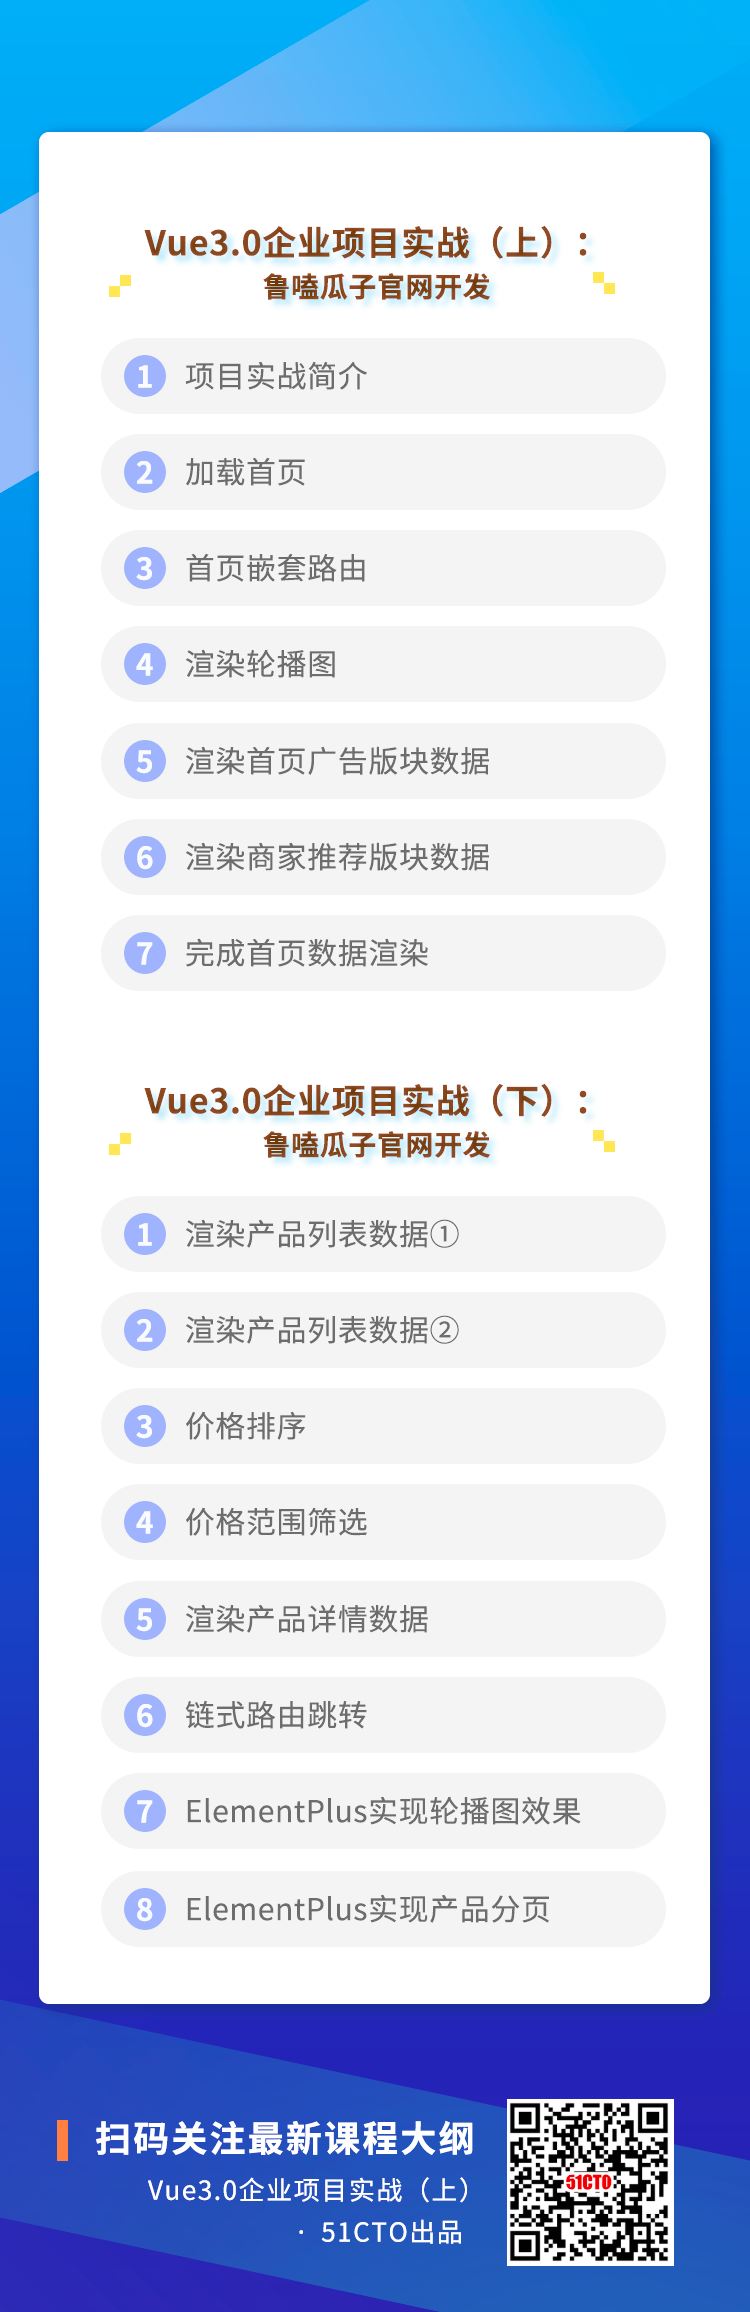 Vue3.0企业项目实战(上) dagang.png